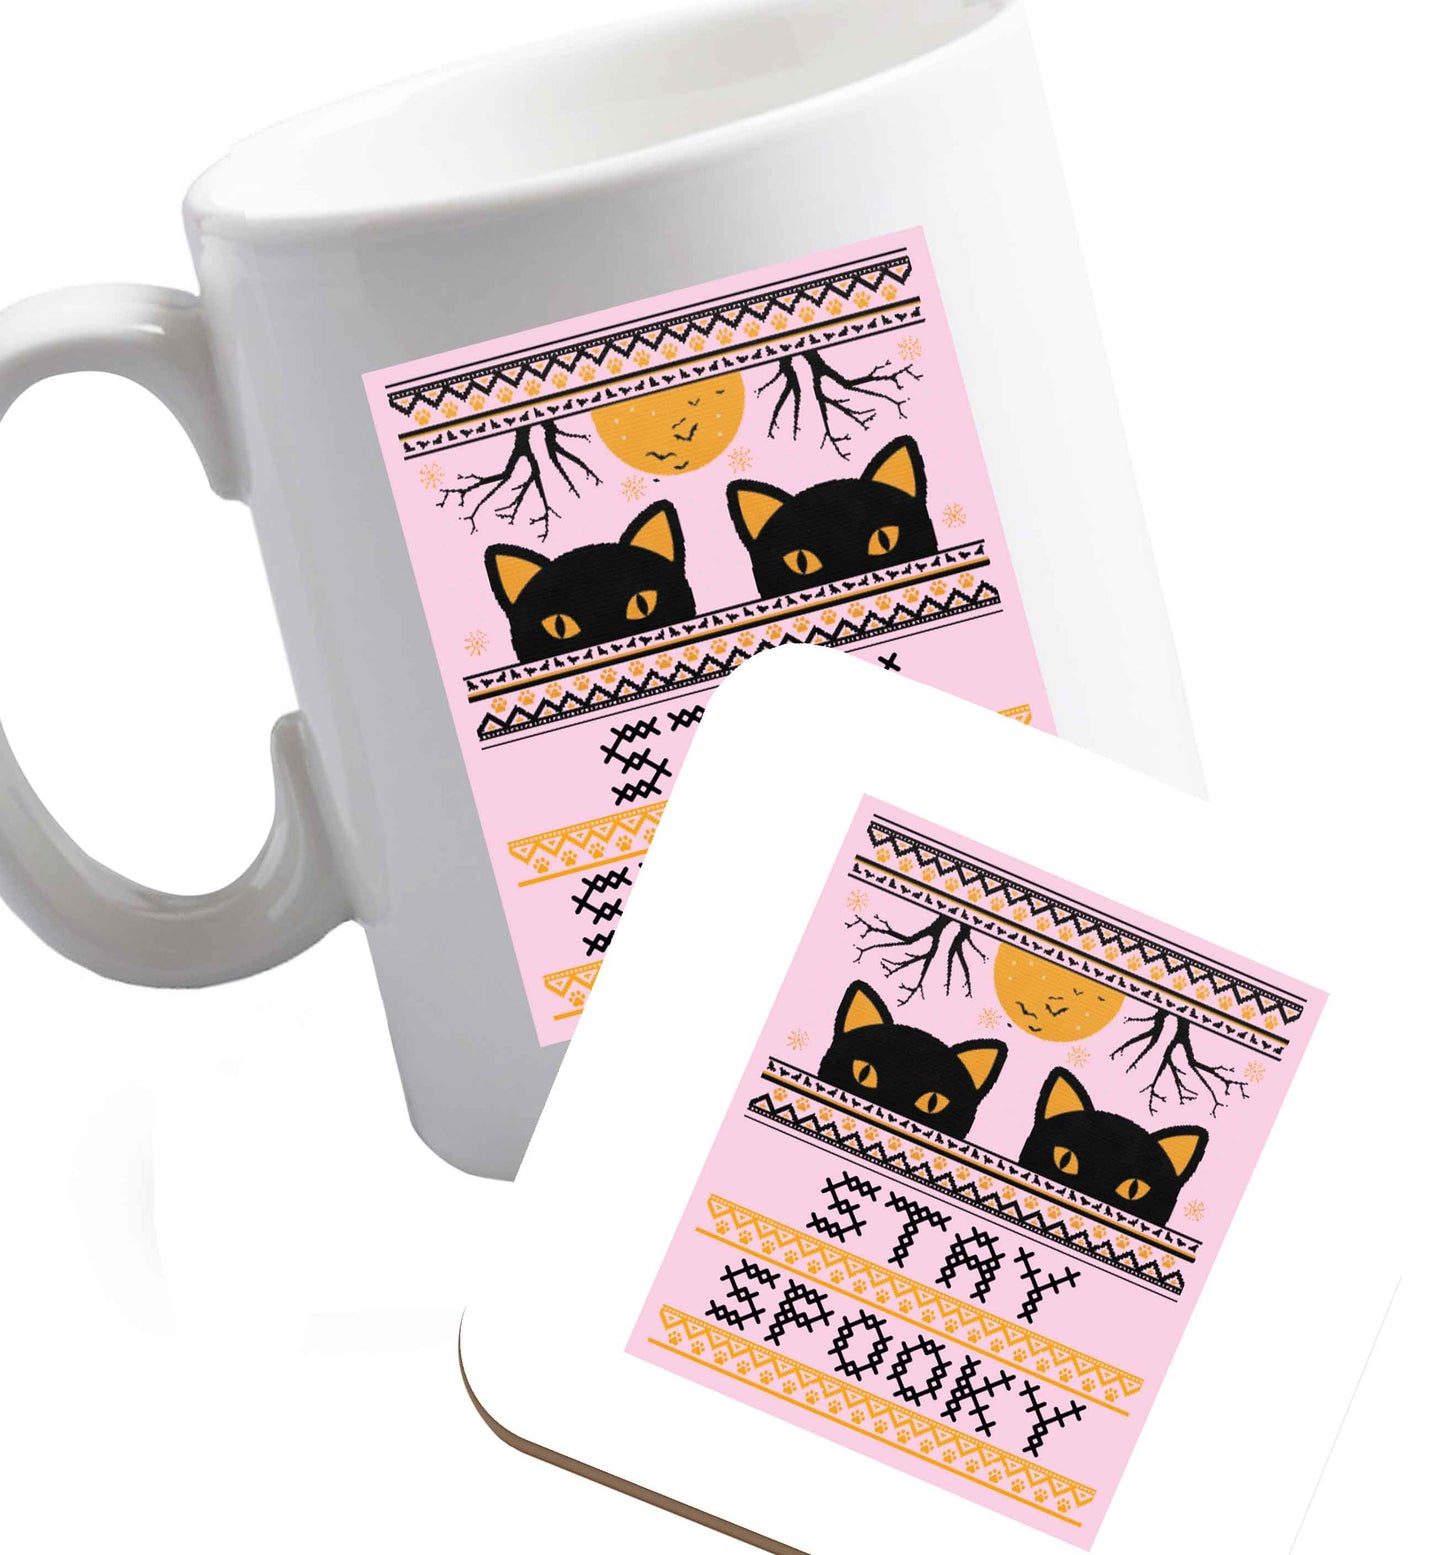 10 oz Stay spooky ceramic mug and coaster set right handed